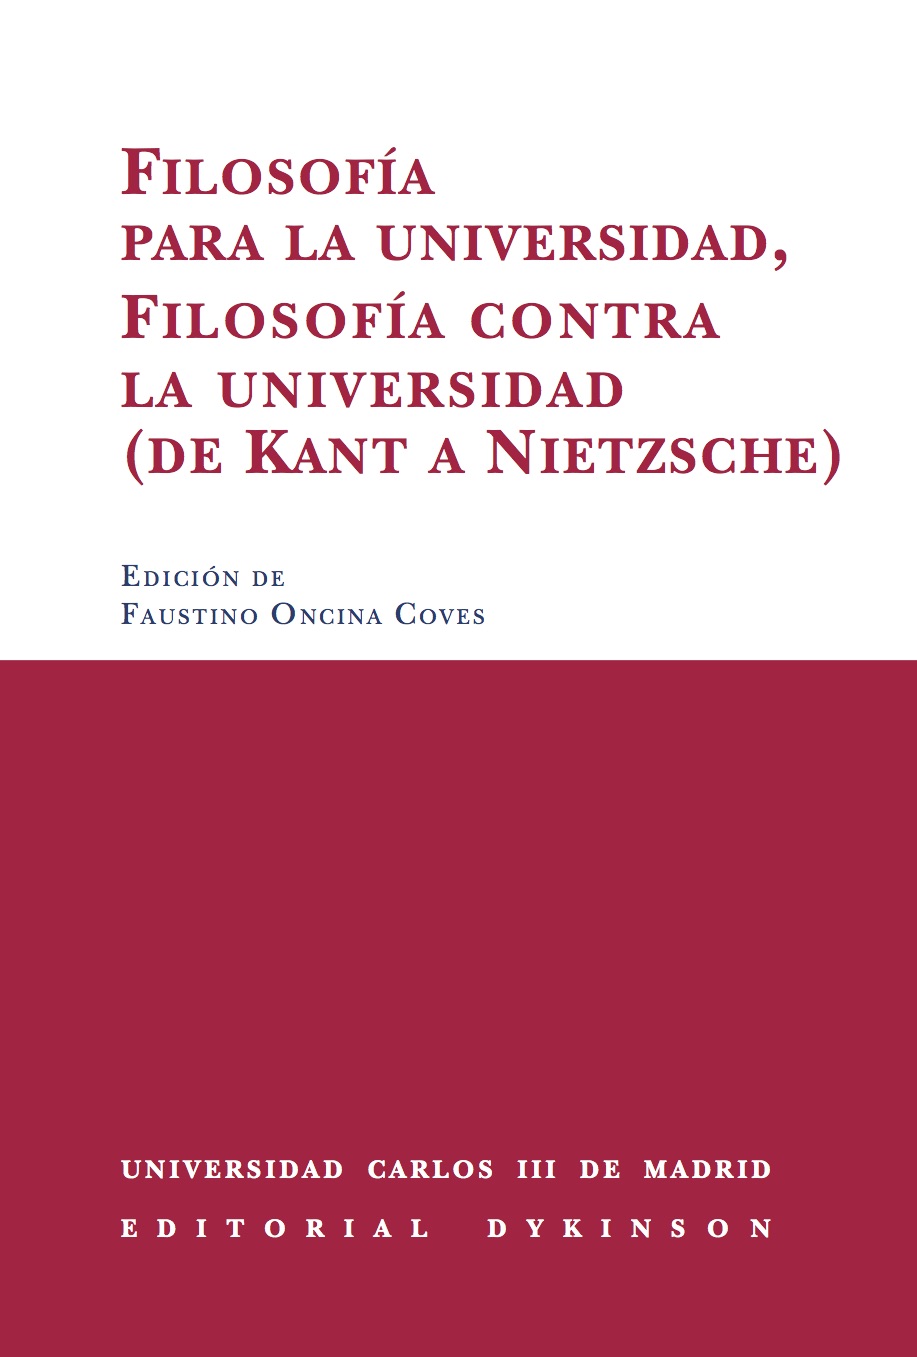 ONCINA COVES Faustino - Filosofia para la universidad, filosofia contra la universid